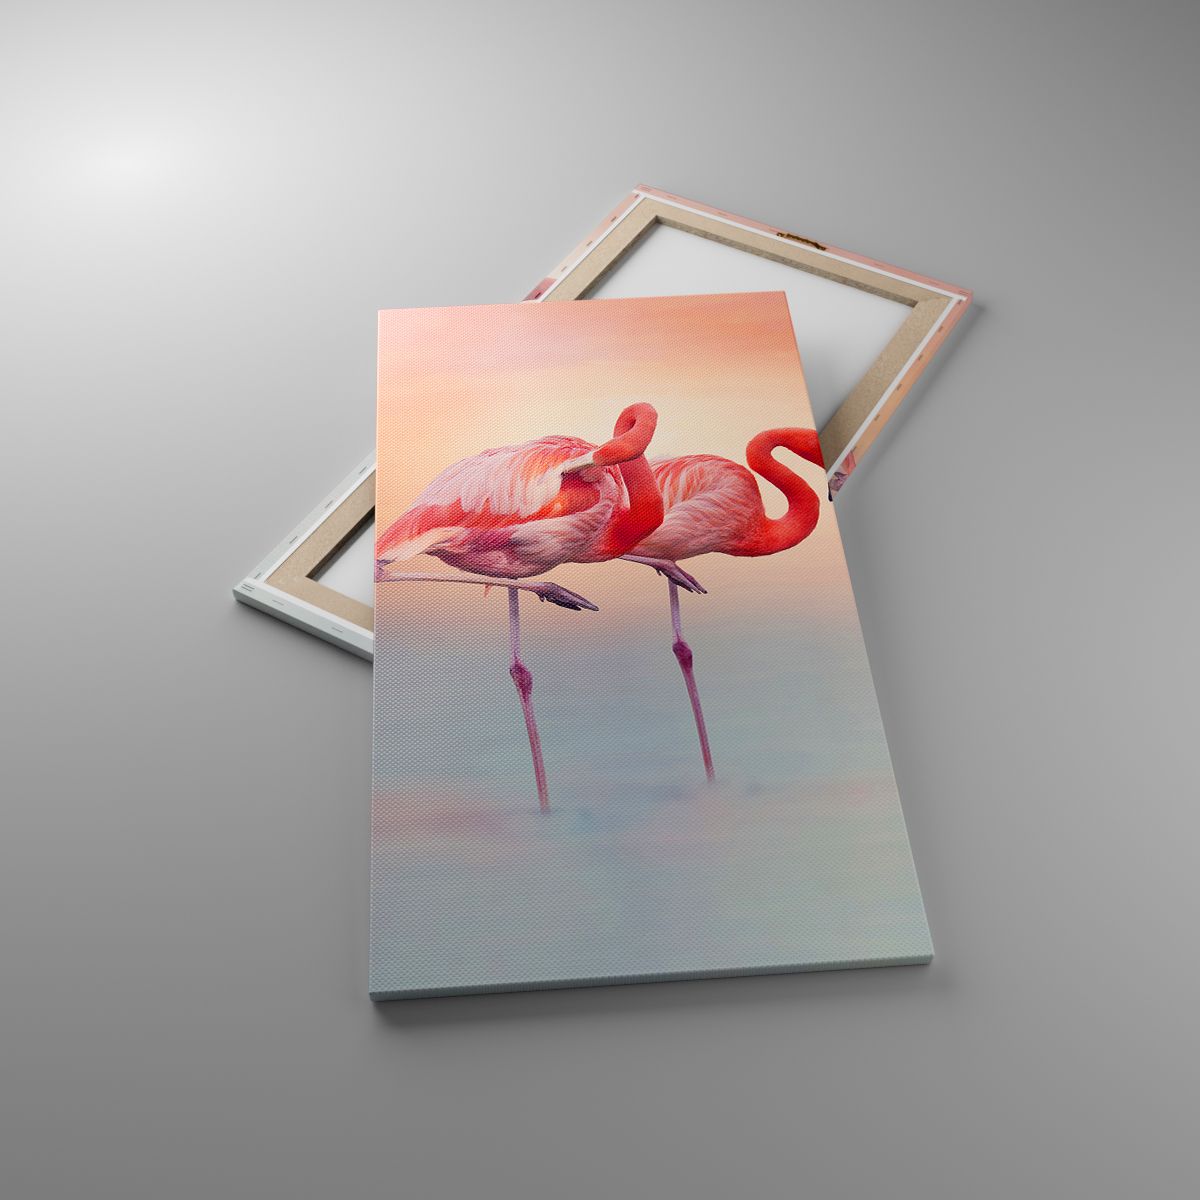 Leinwandbild Flamingos, Leinwandbild Die Vögel, Leinwandbild Natur, Leinwandbild Tiere, Leinwandbild Pastellfarben